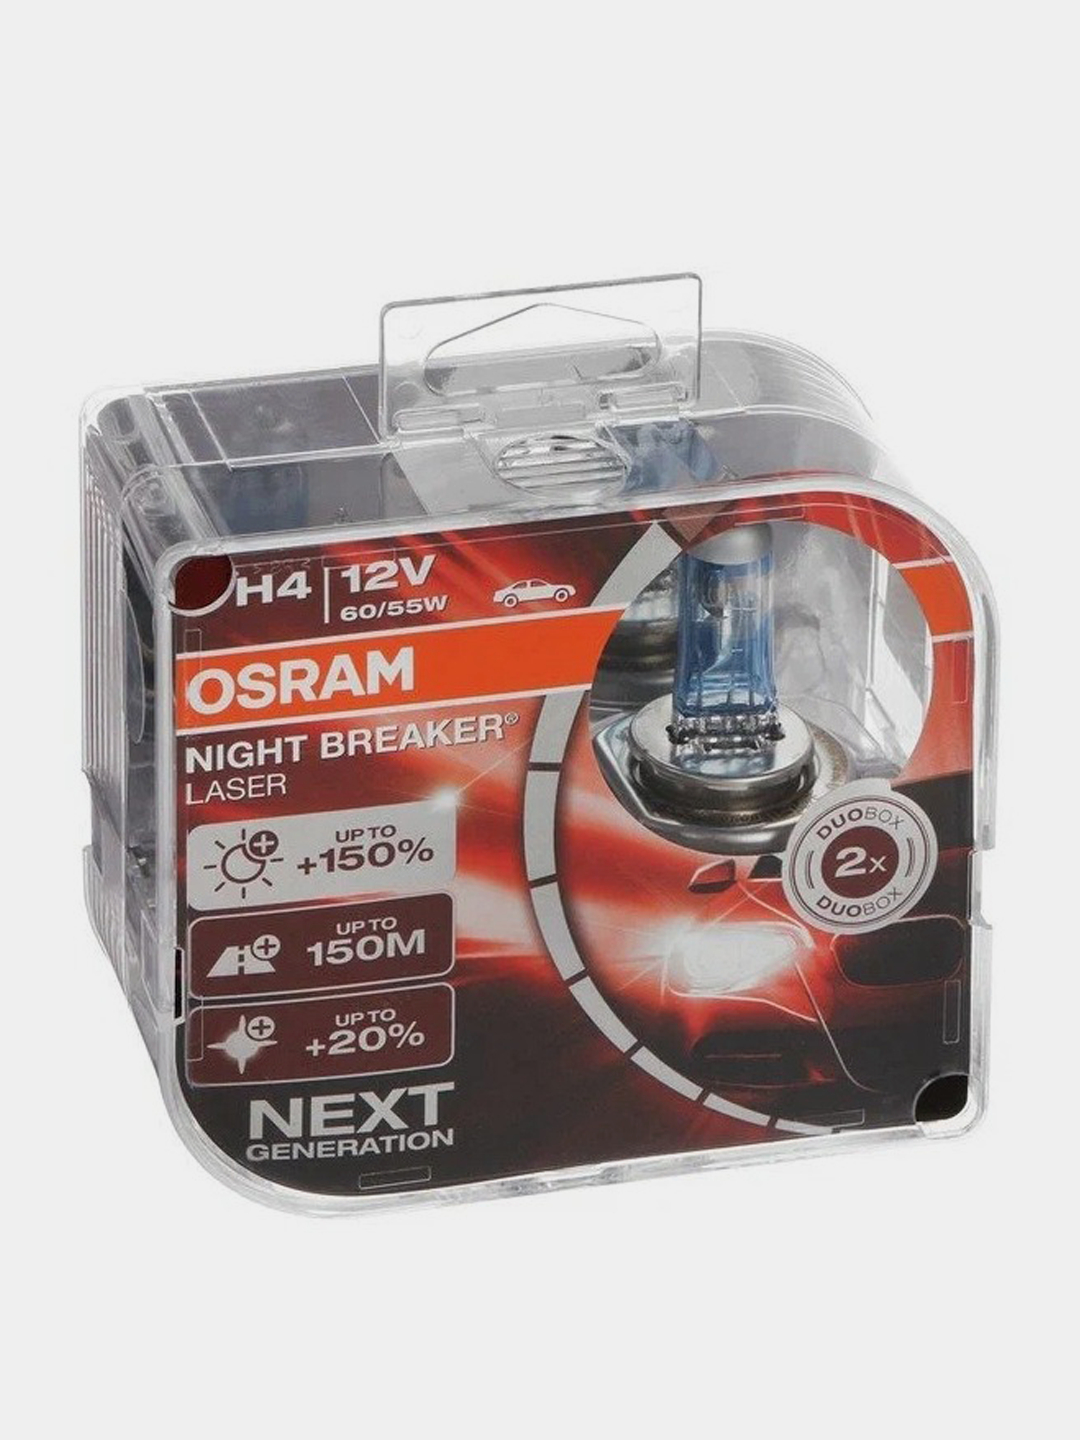 Галогенные лампы OSRAM NIGHT BREAKER LASER H4 +150% 12V 60/55W, 64193NL-HCB,  2 шт. купить по цене 2282 ₽ в интернет-магазине KazanExpress